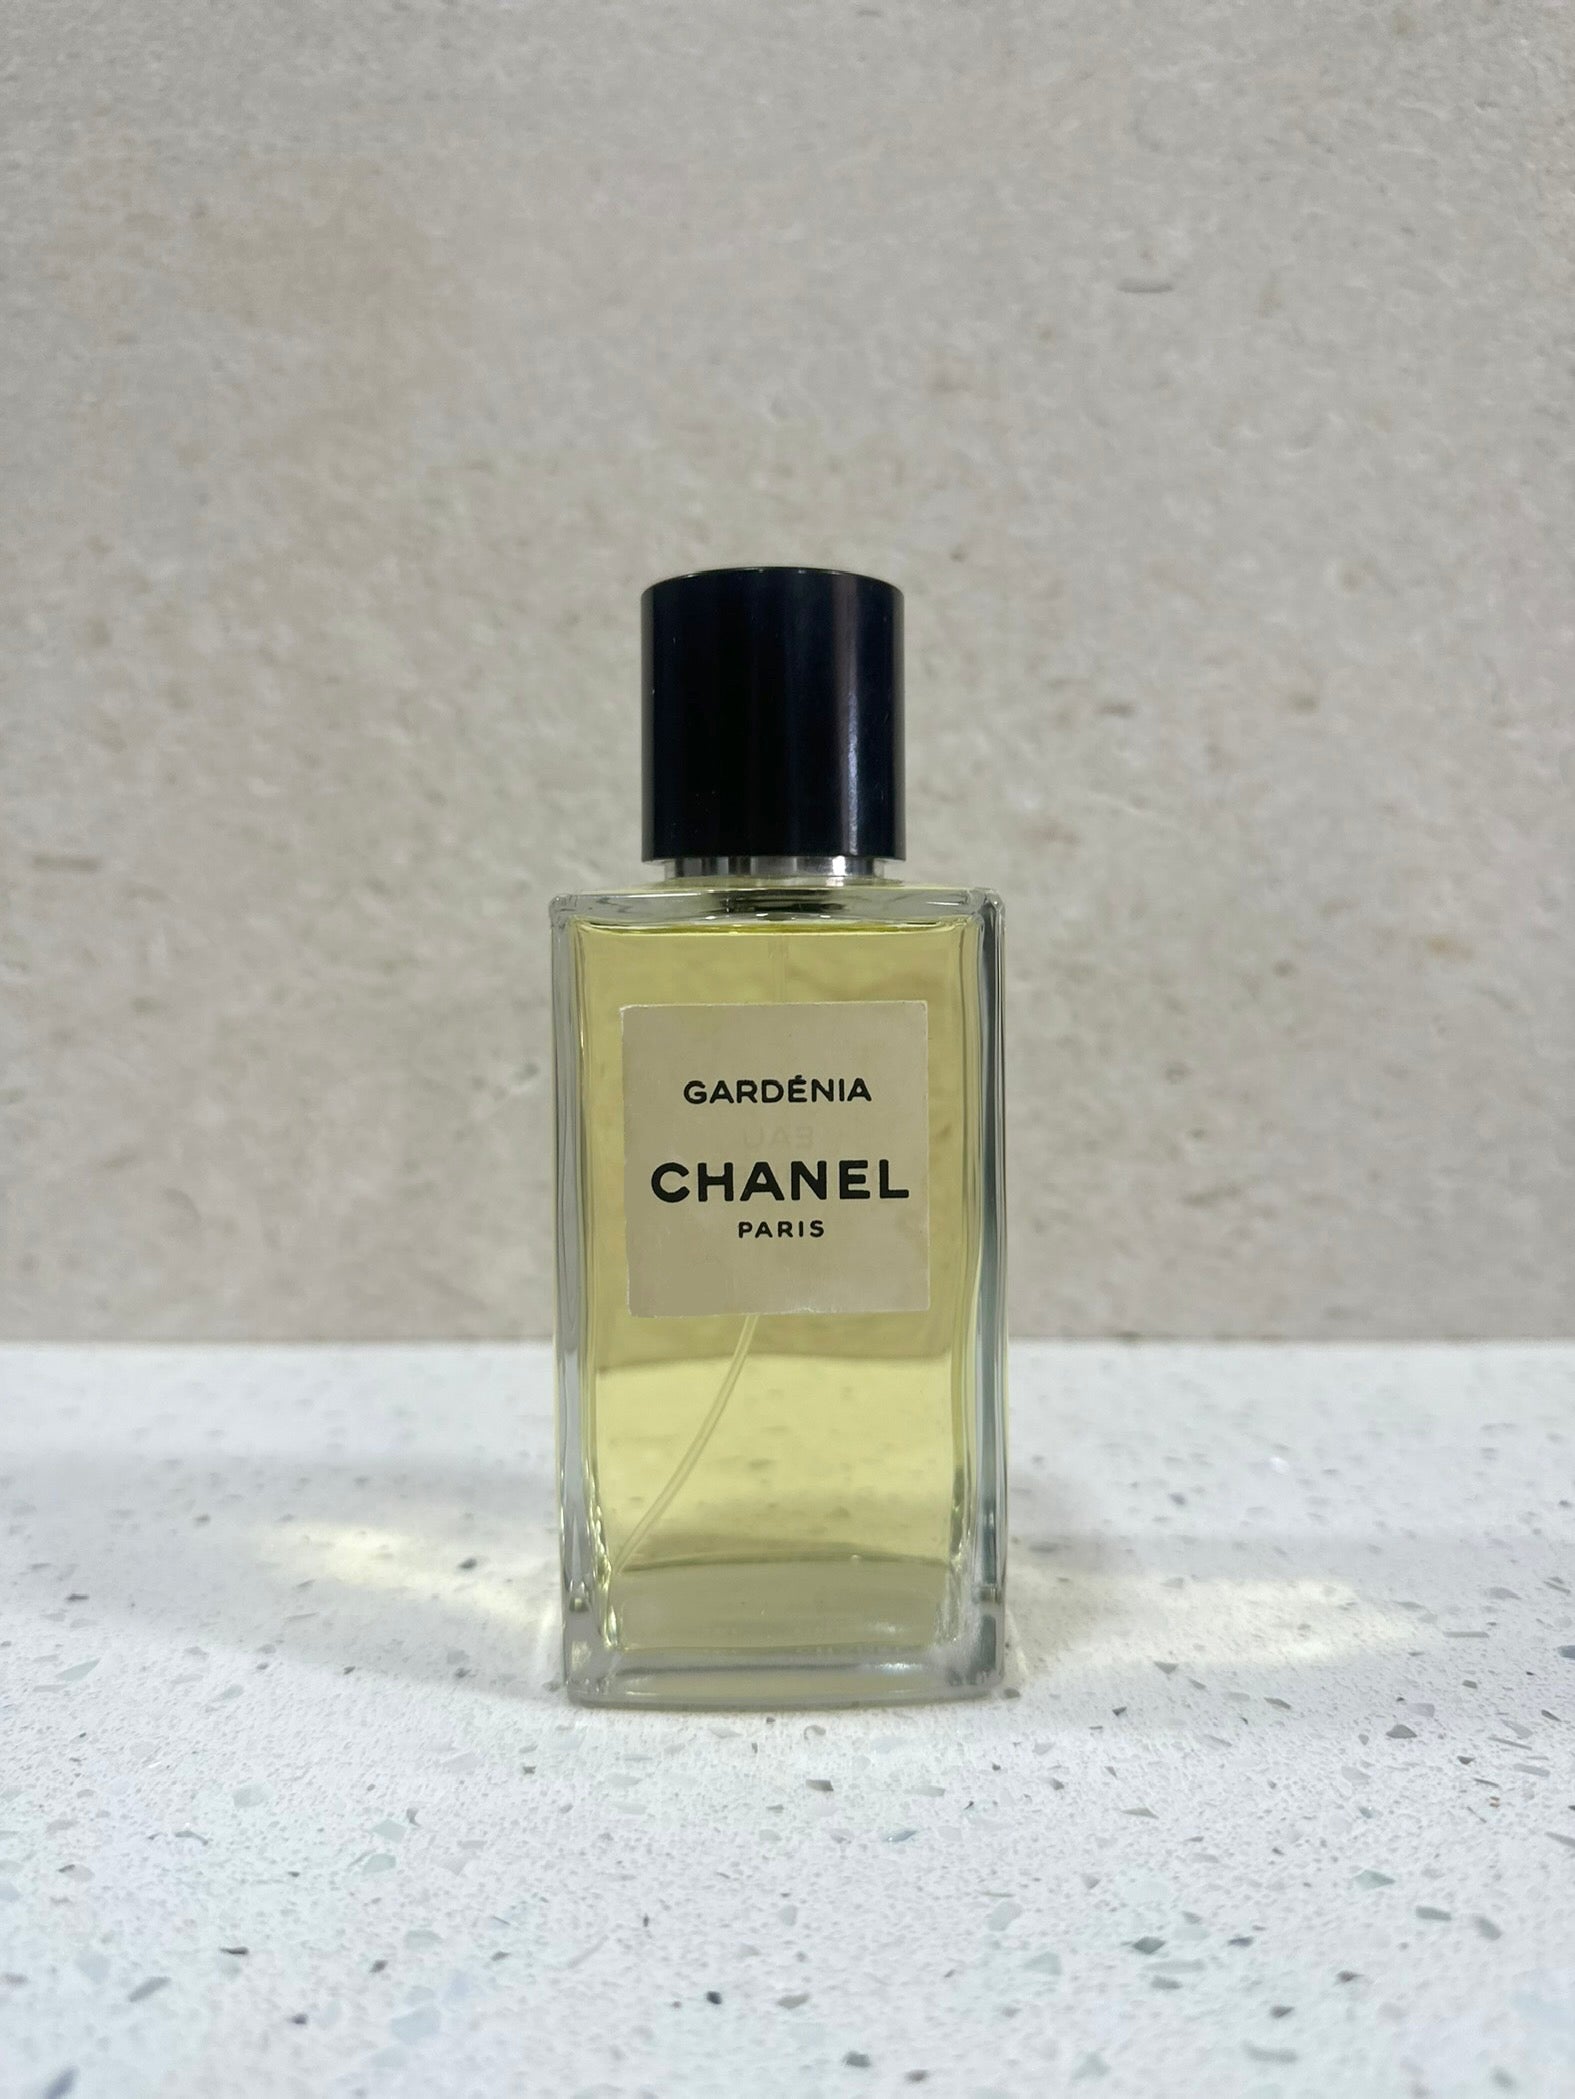 Chanel Gardenia - Les Exclusifs de Chanel - for Women - Eau de